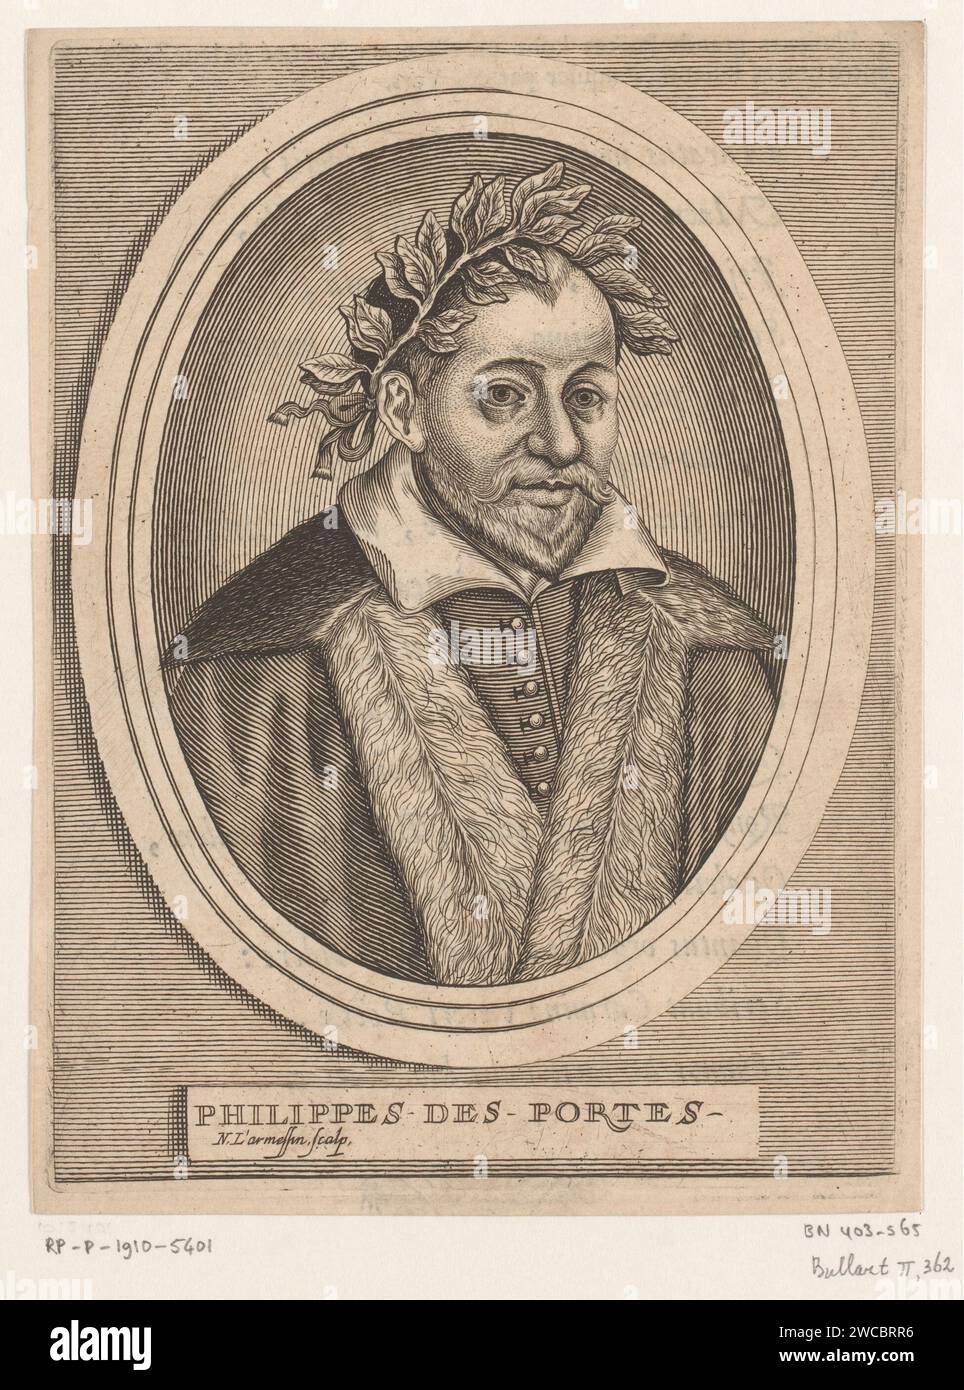 Portret van Philippe Desportes, Nicolas de Larmessin (I), 1682 print  Brussels paper engraving / letterpress printing historical persons. portrait of a writer Stock Photo